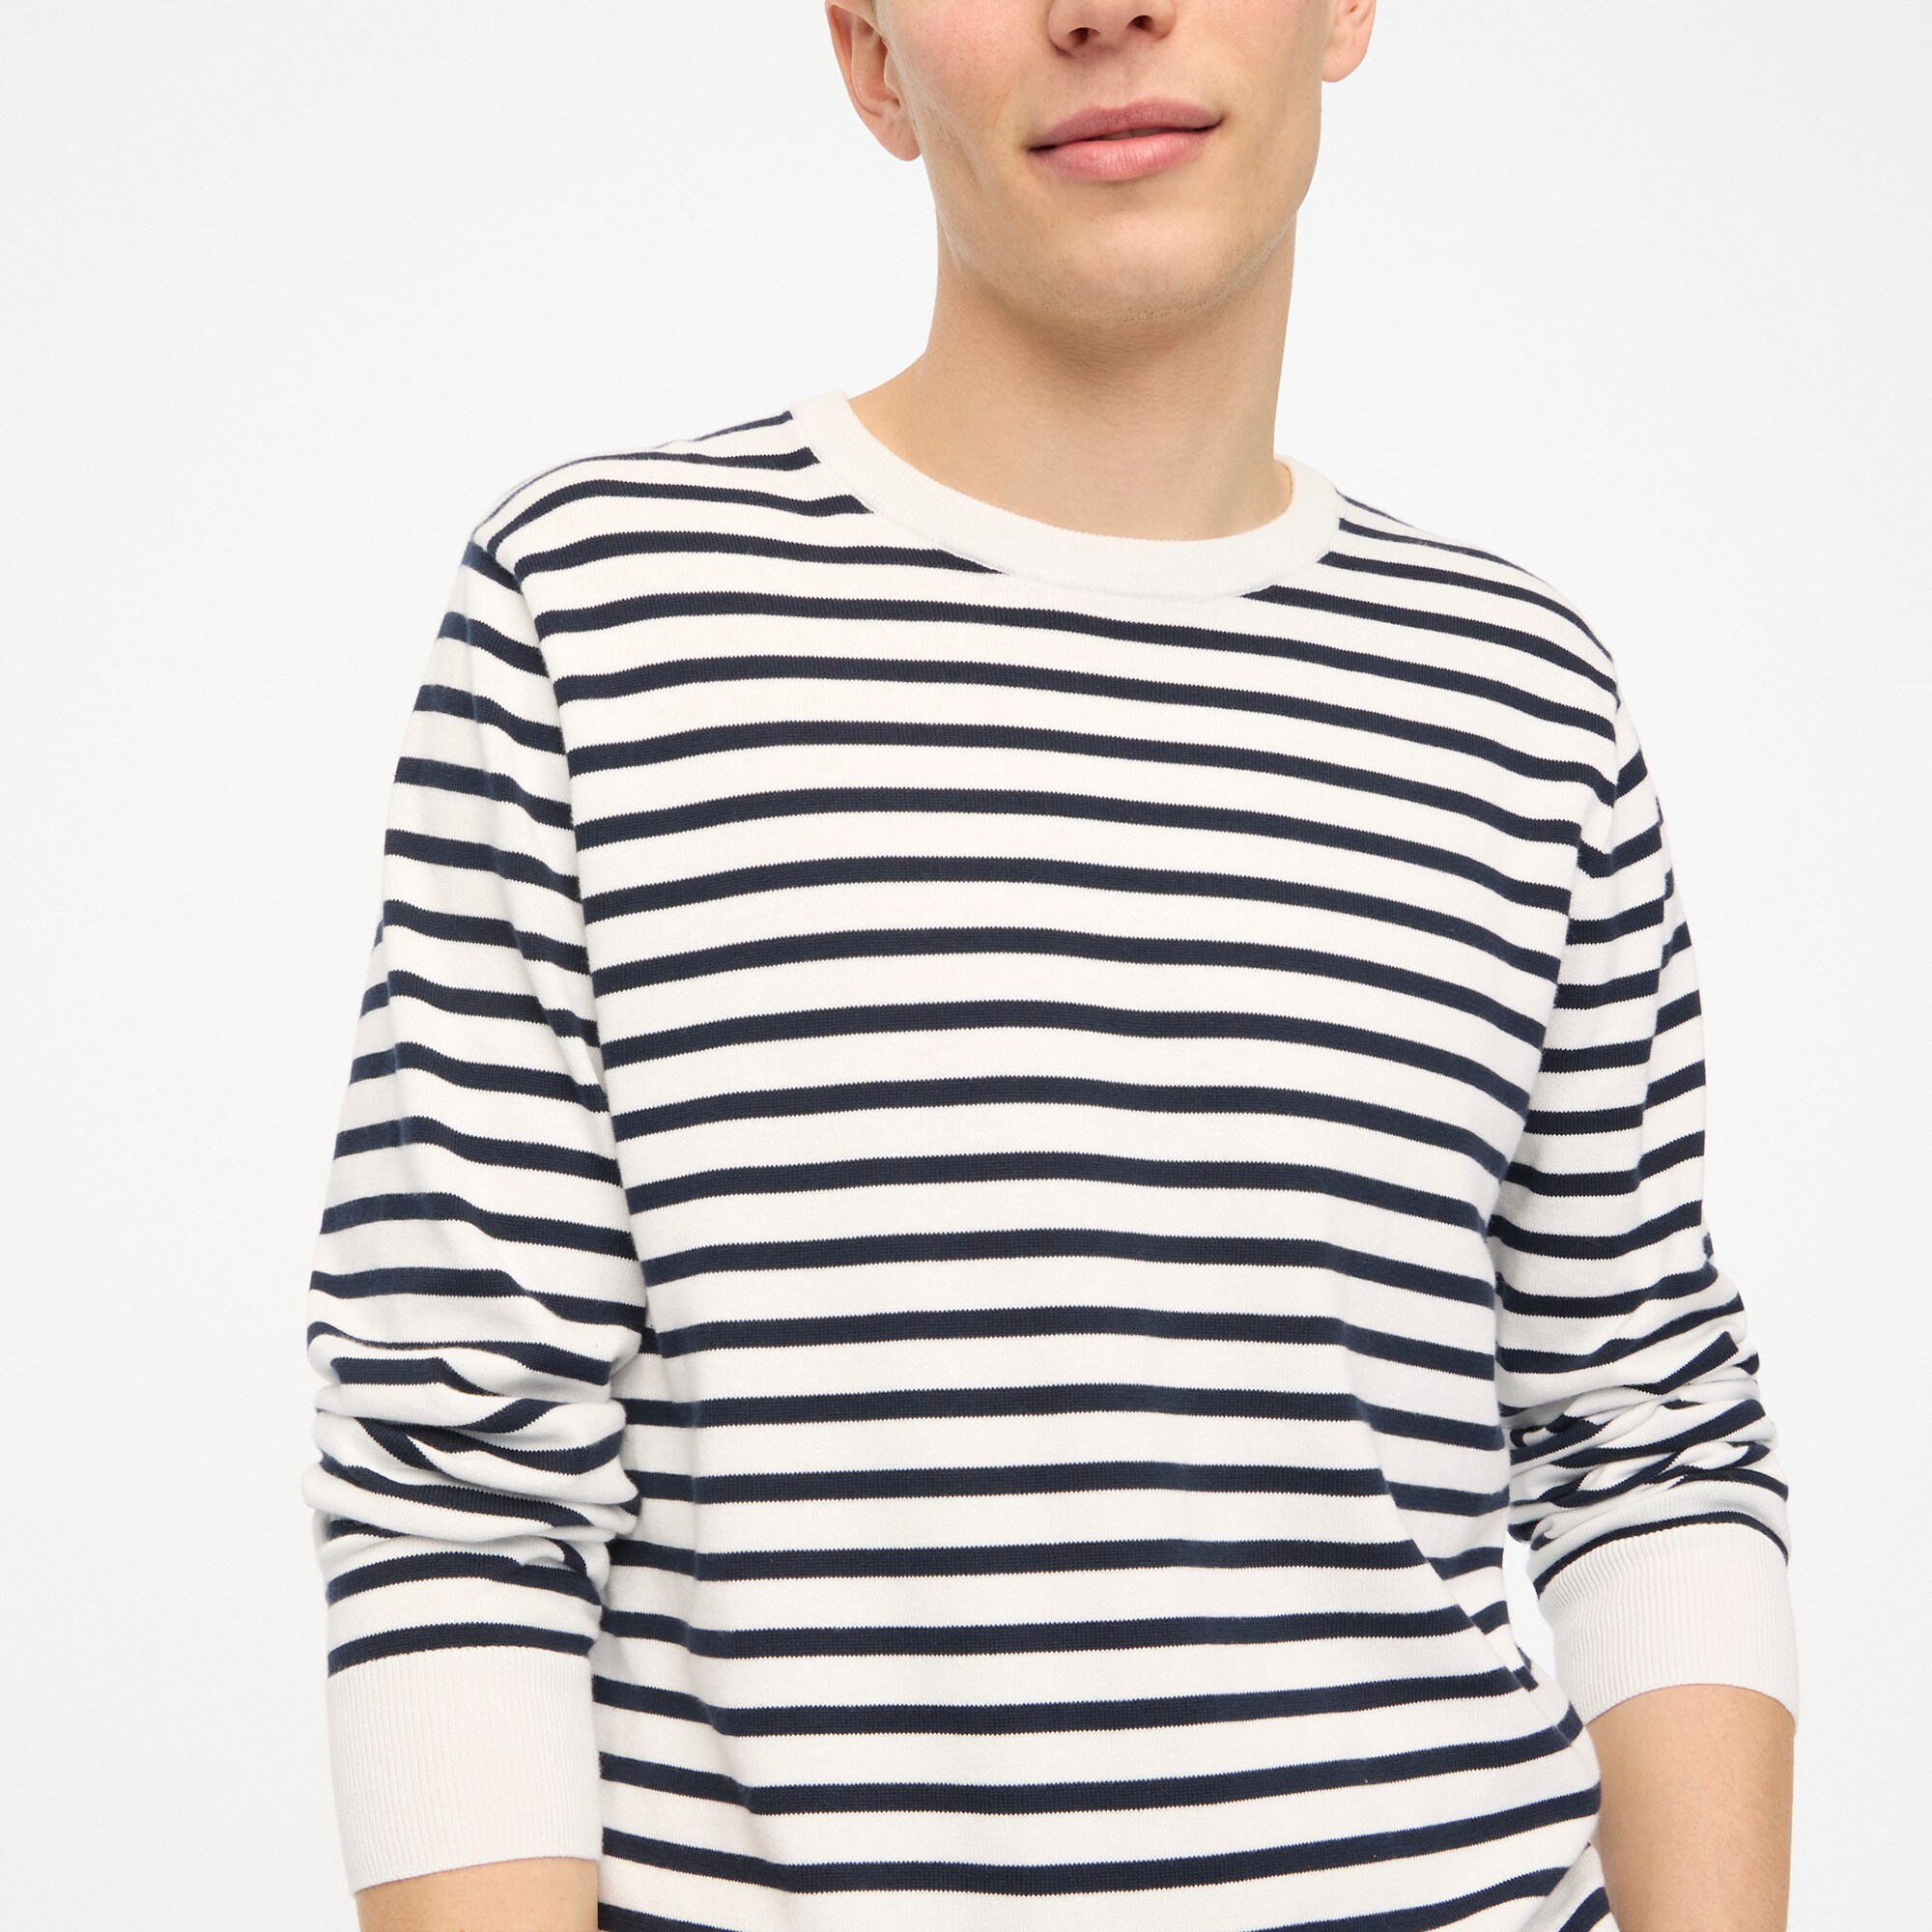  Long-sleeve striped cotton crewneck sweater